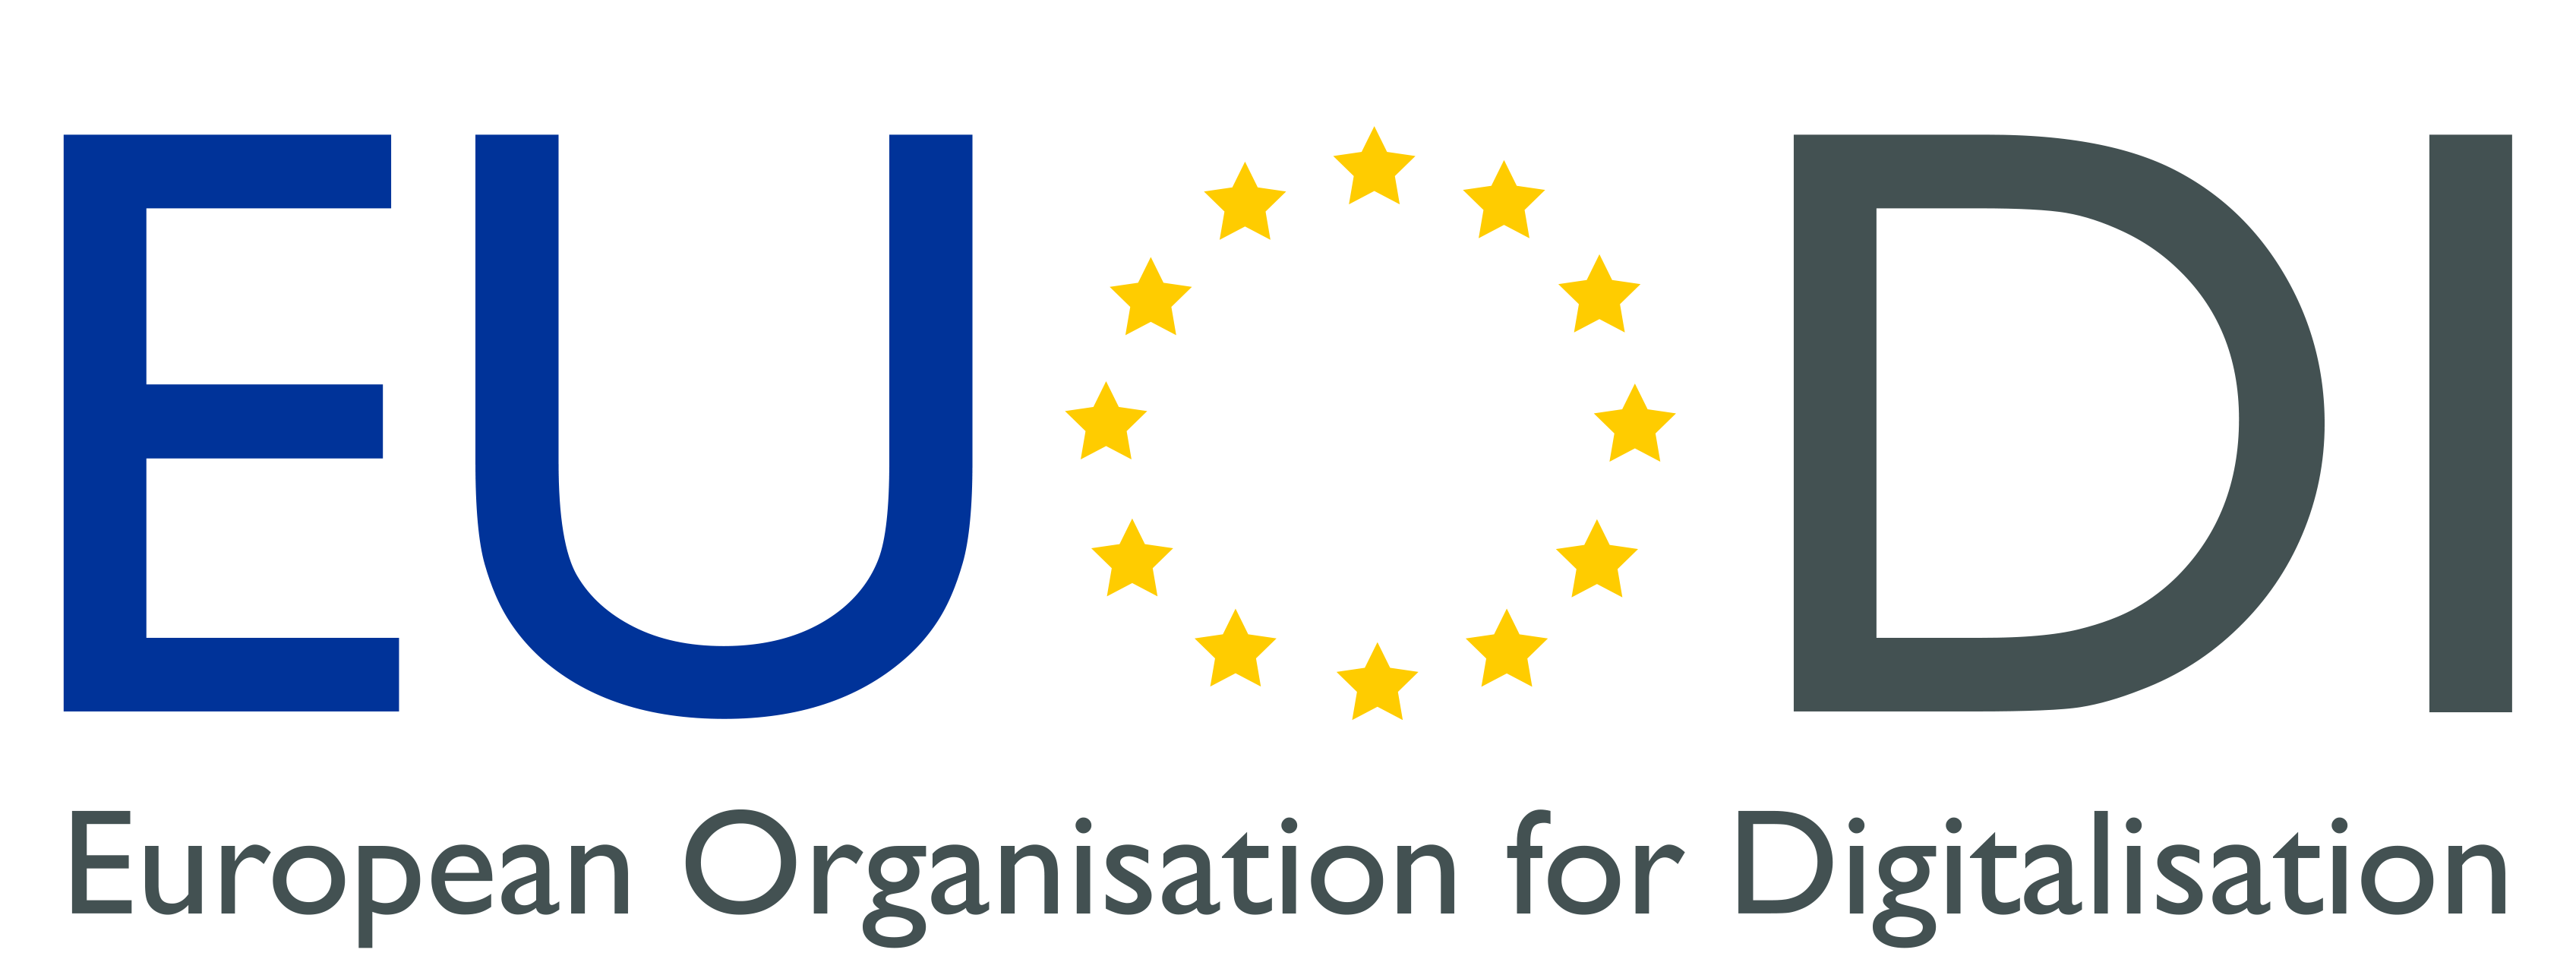 EUODI - European Organisation for Digitalisation